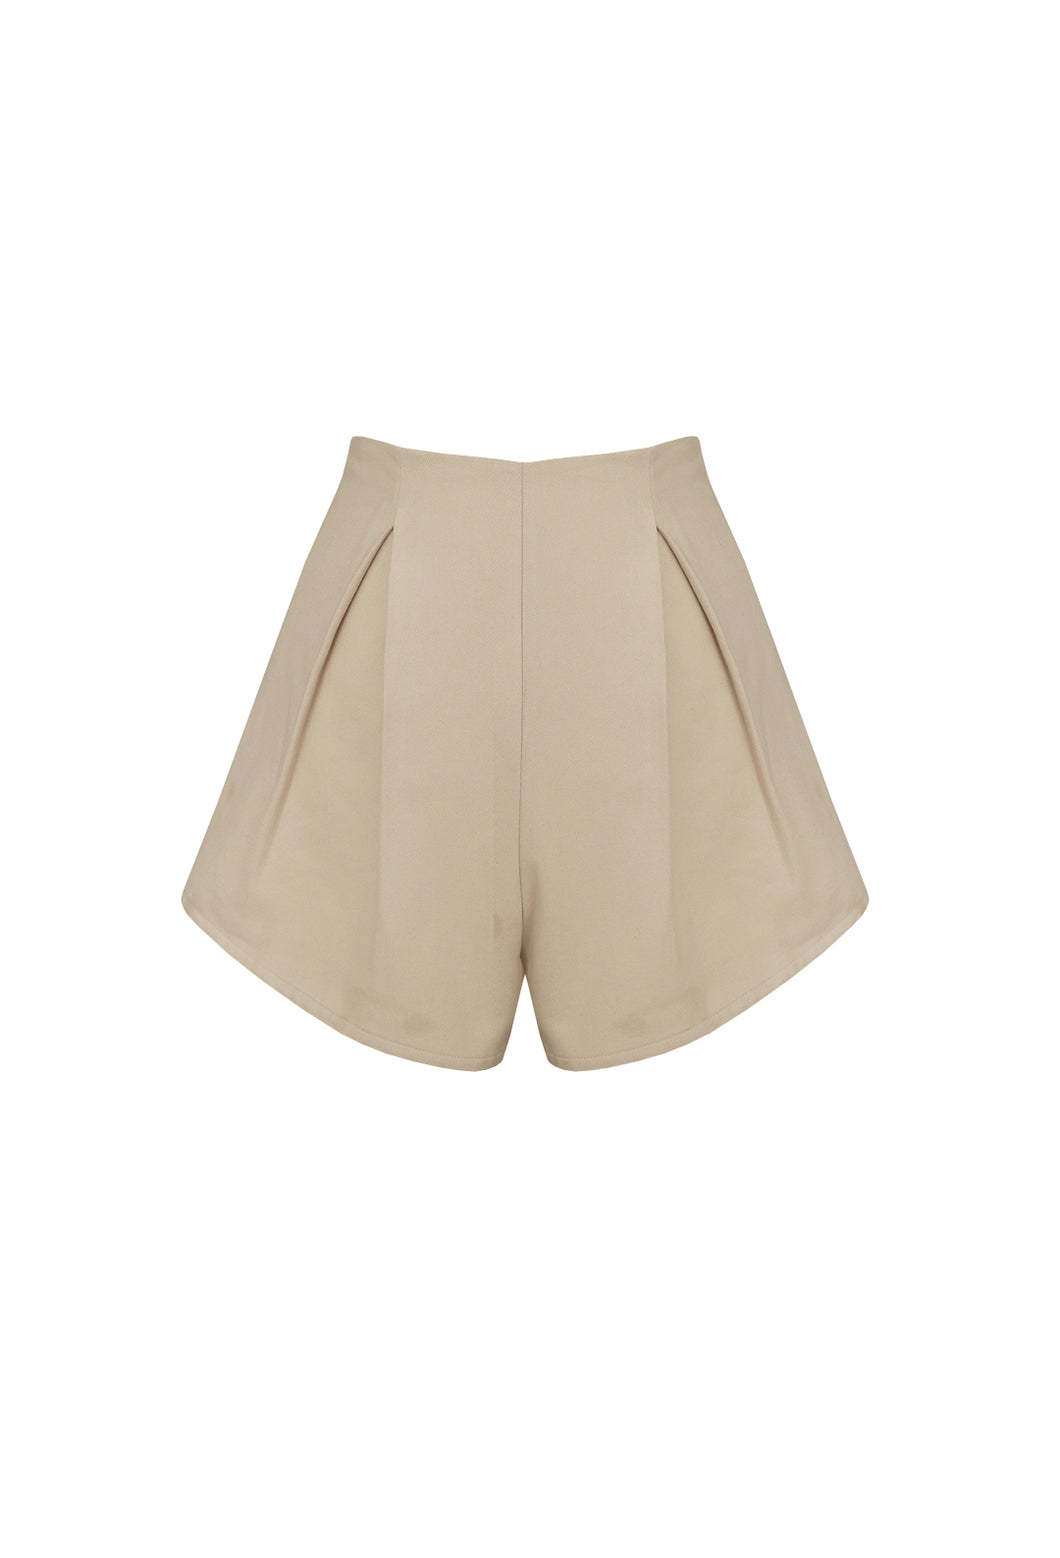 Pleats Shorts Bottom - Brim Creamy